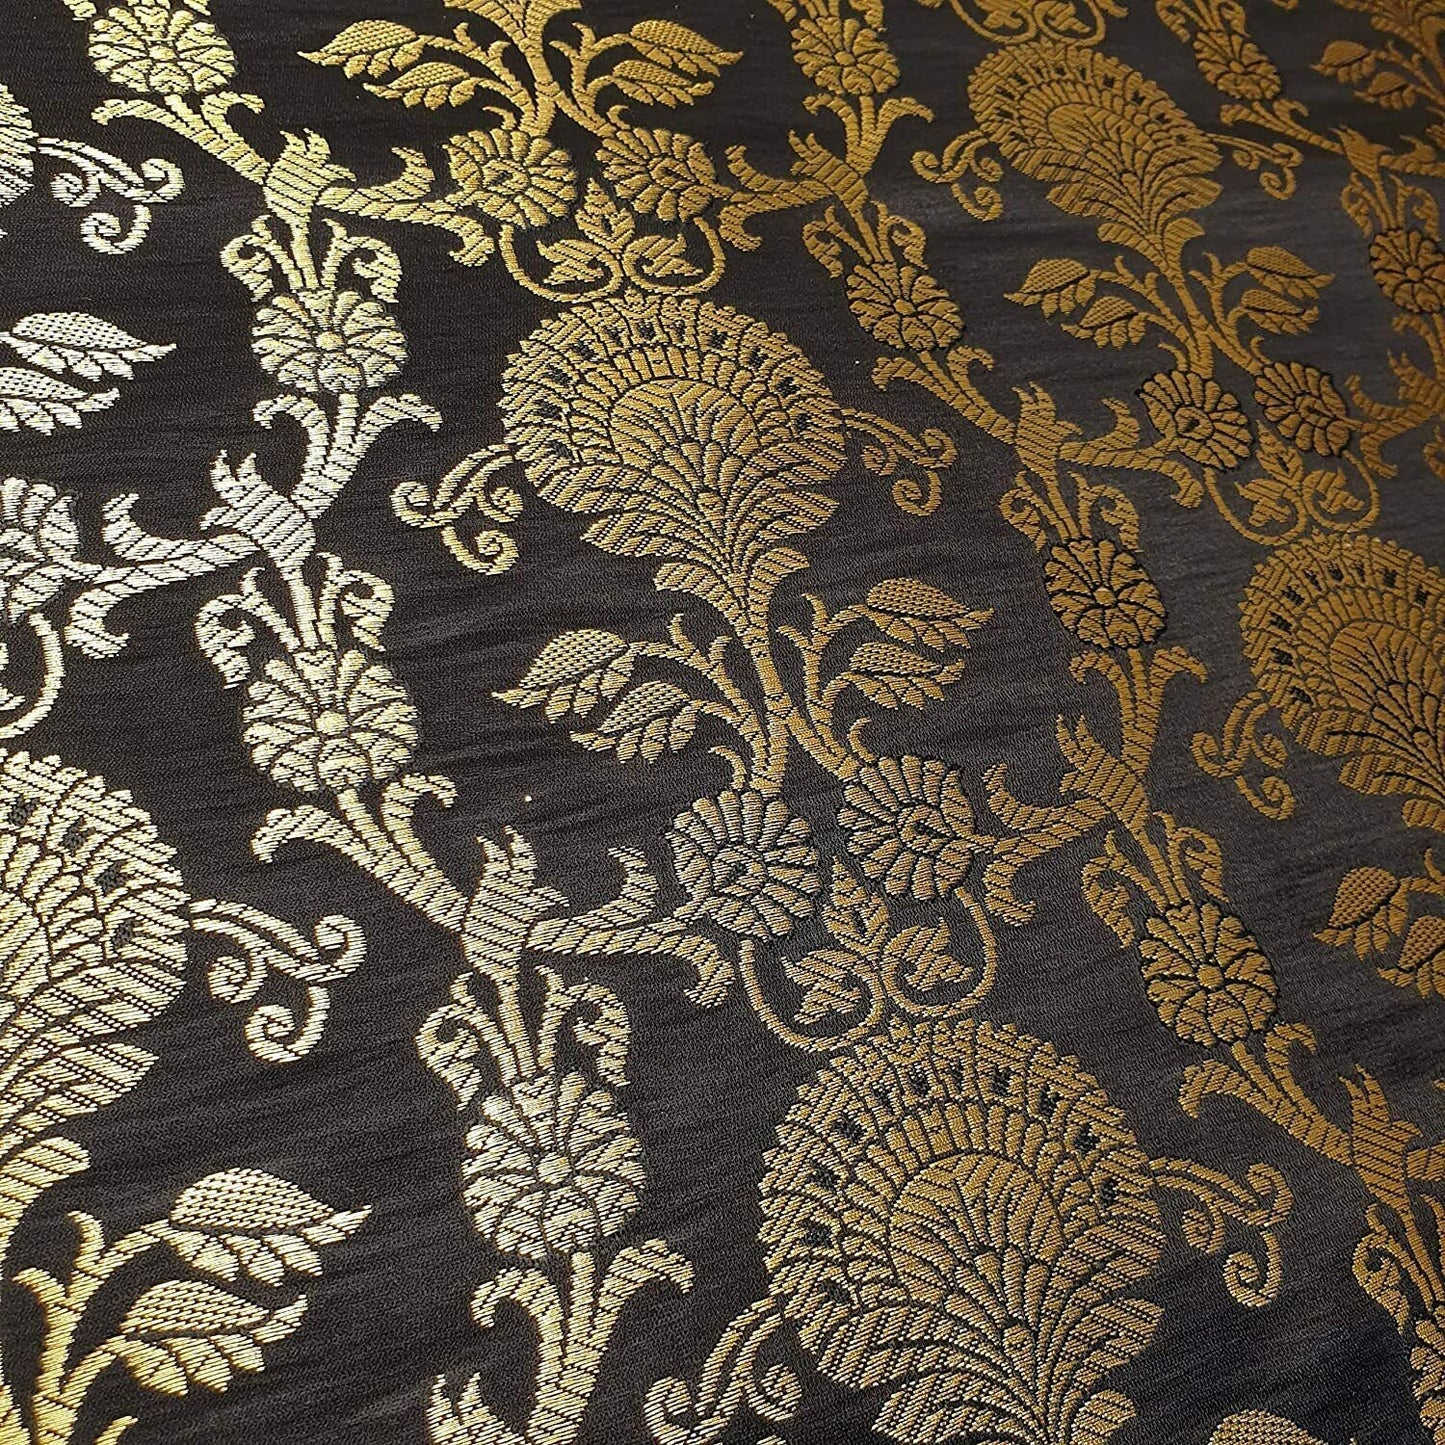 New Prints Ornamental Floral Gold Metallic Print Indian Banarasi Brocade Fabric (Black)